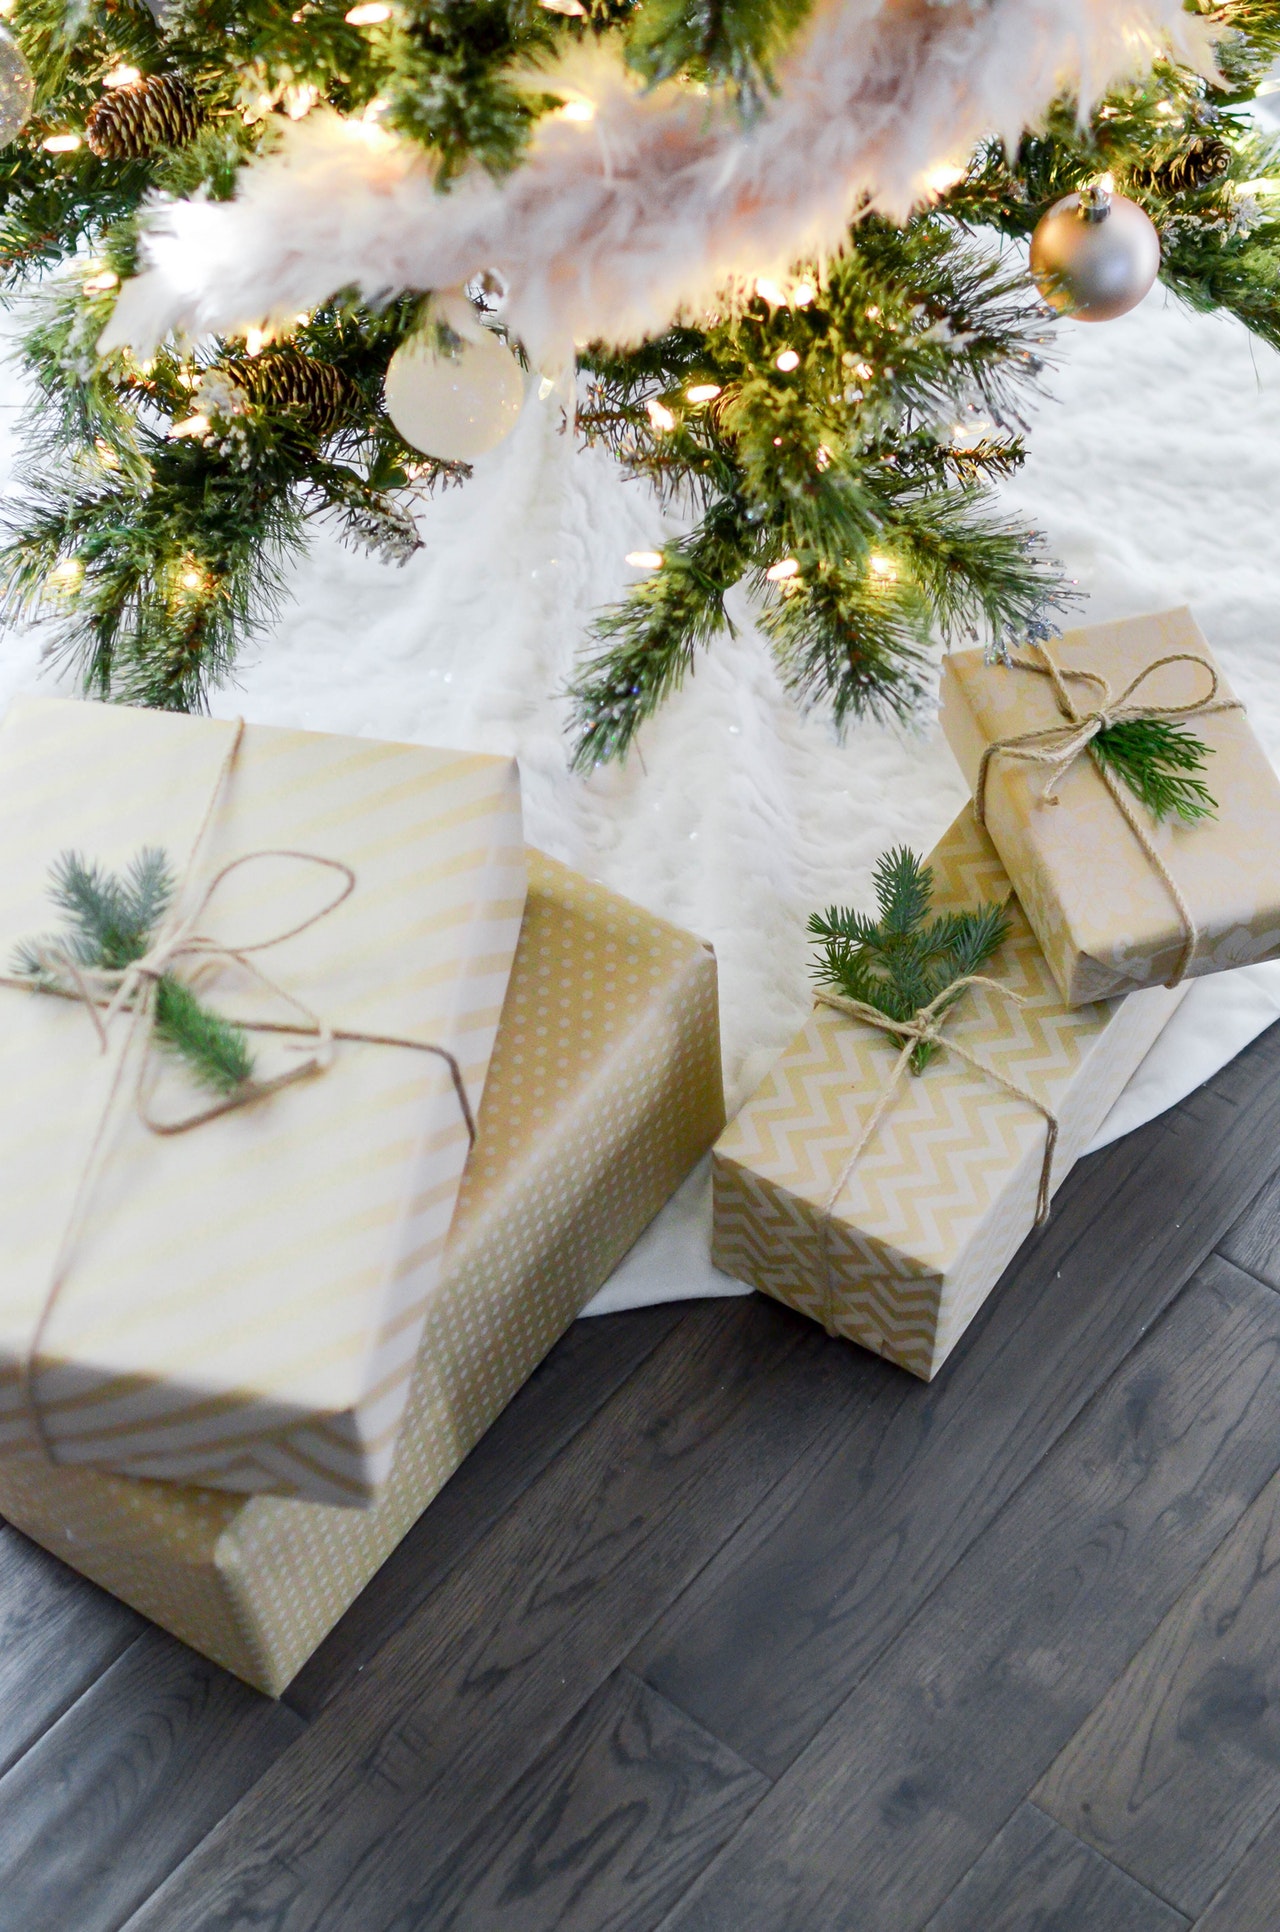 Presents under Christmas tree